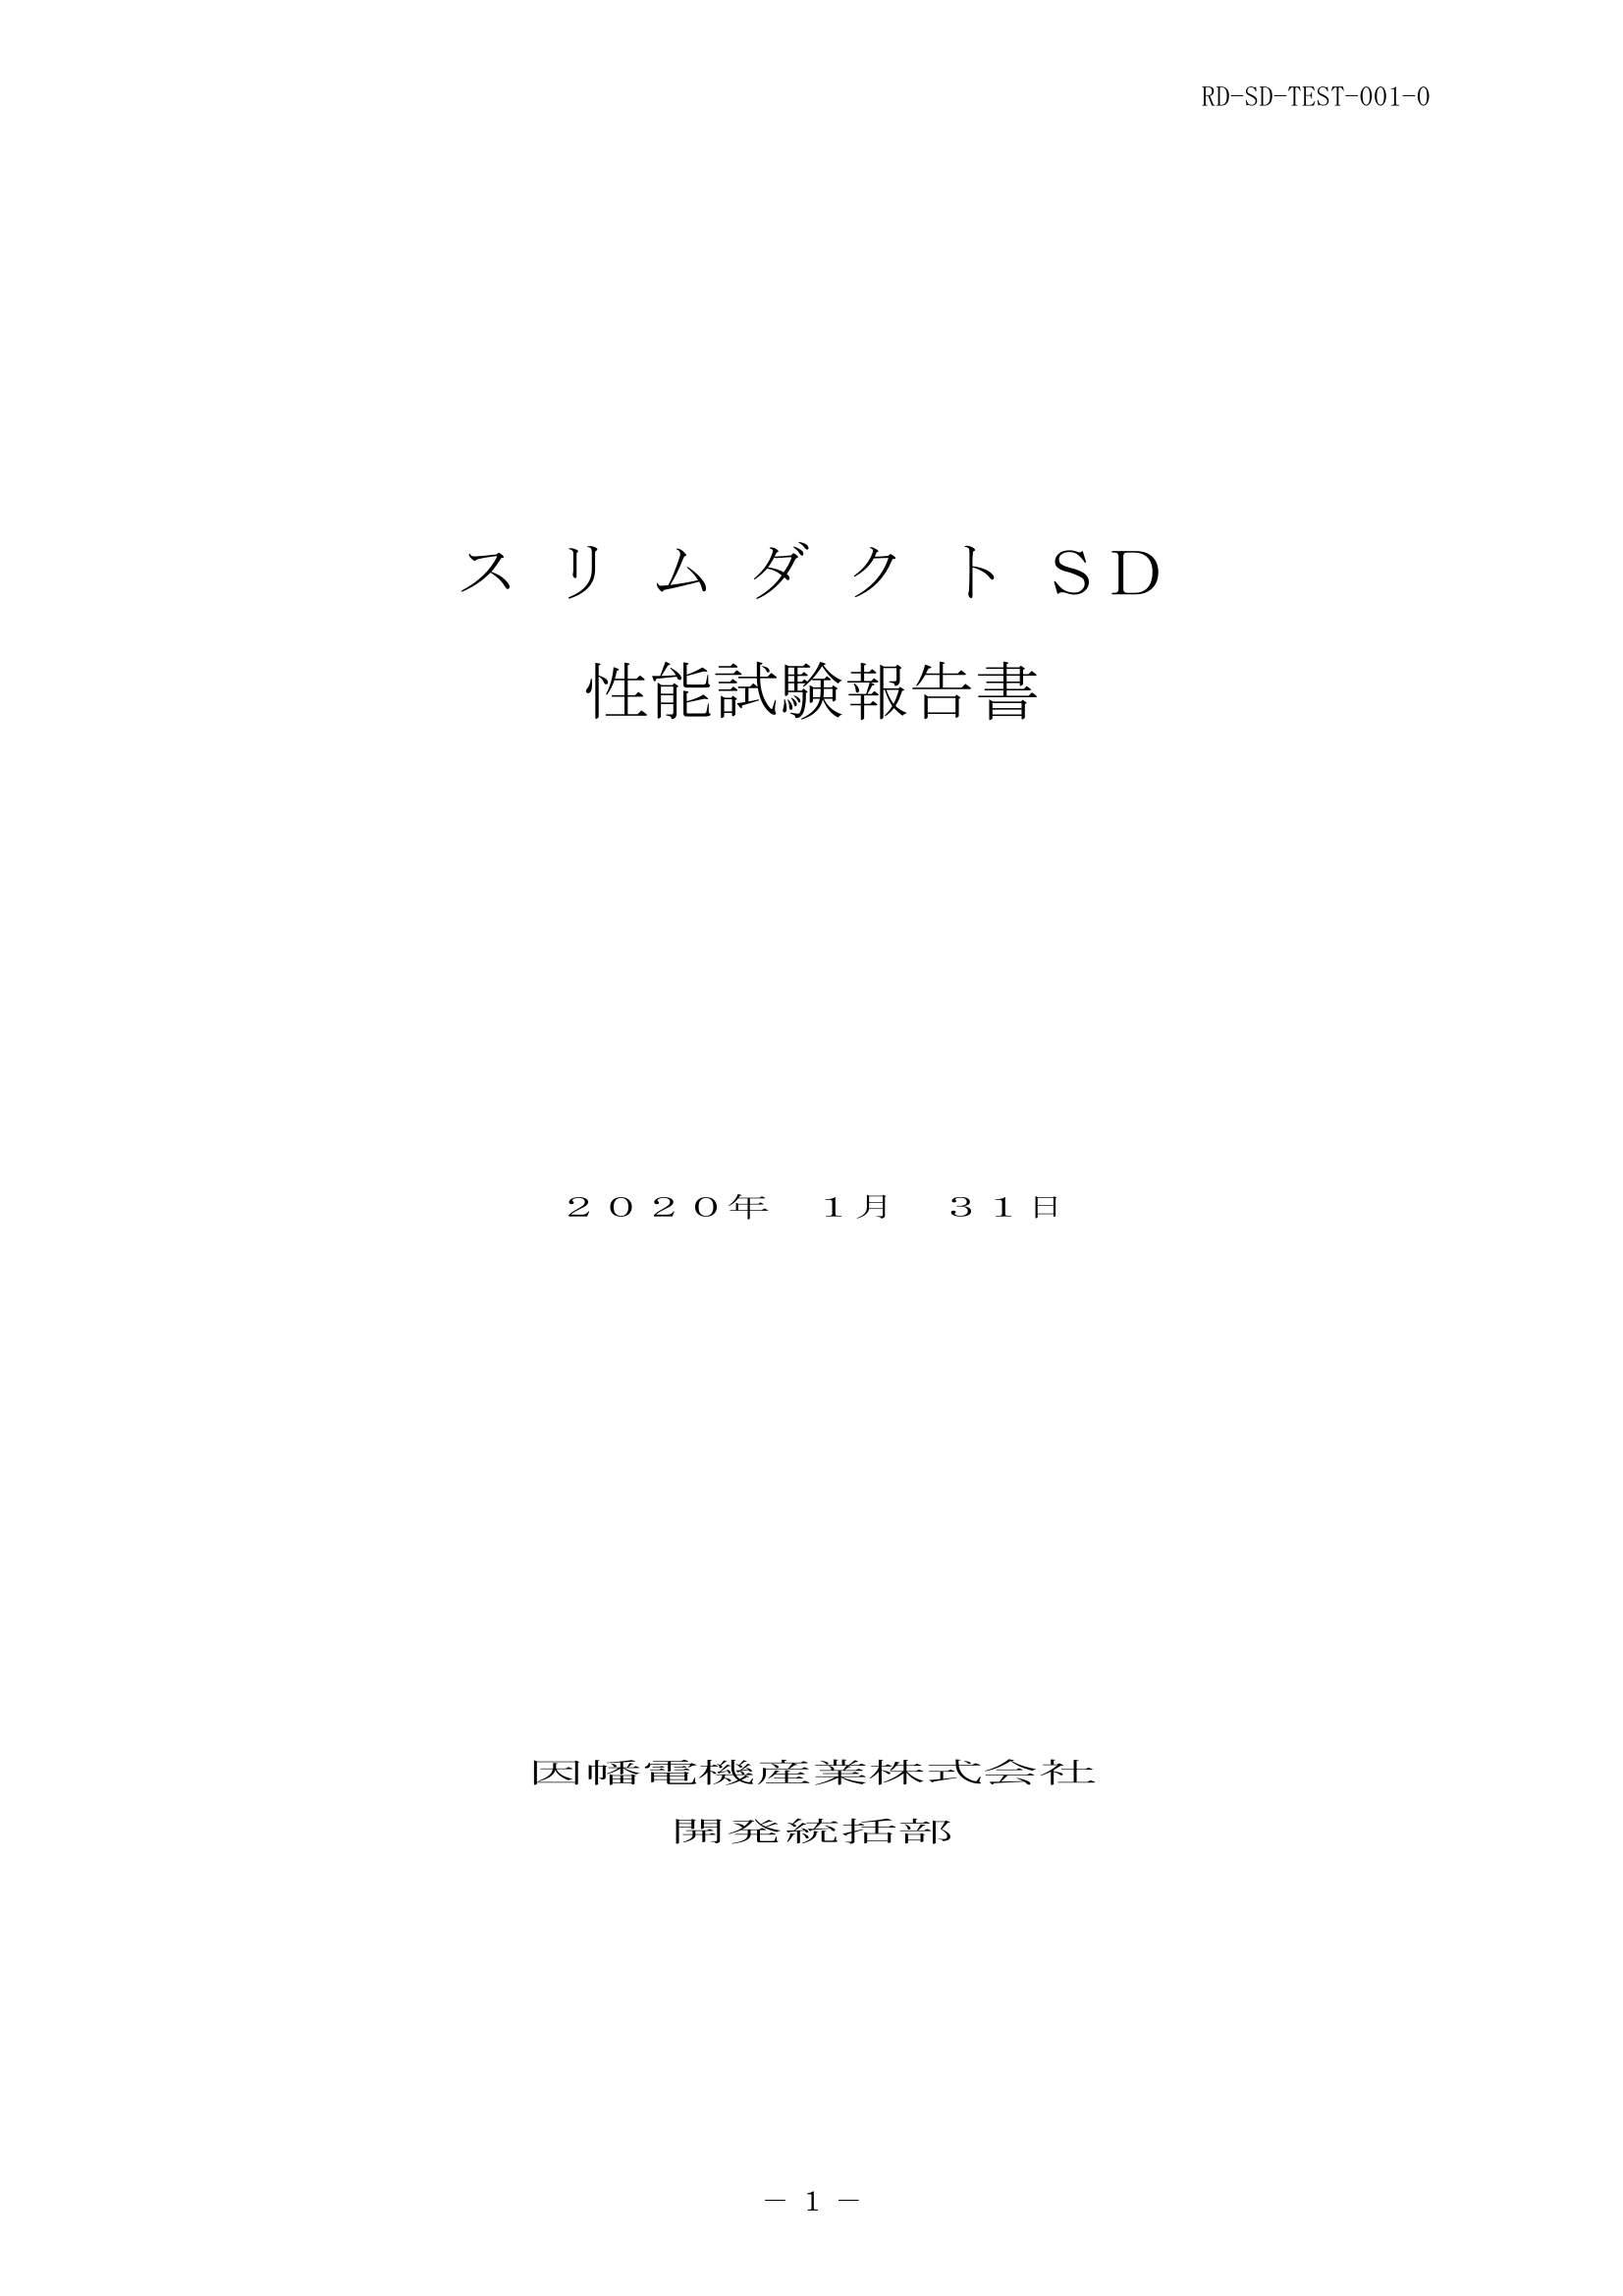 SD_性能試験報告書_20200131.pdf